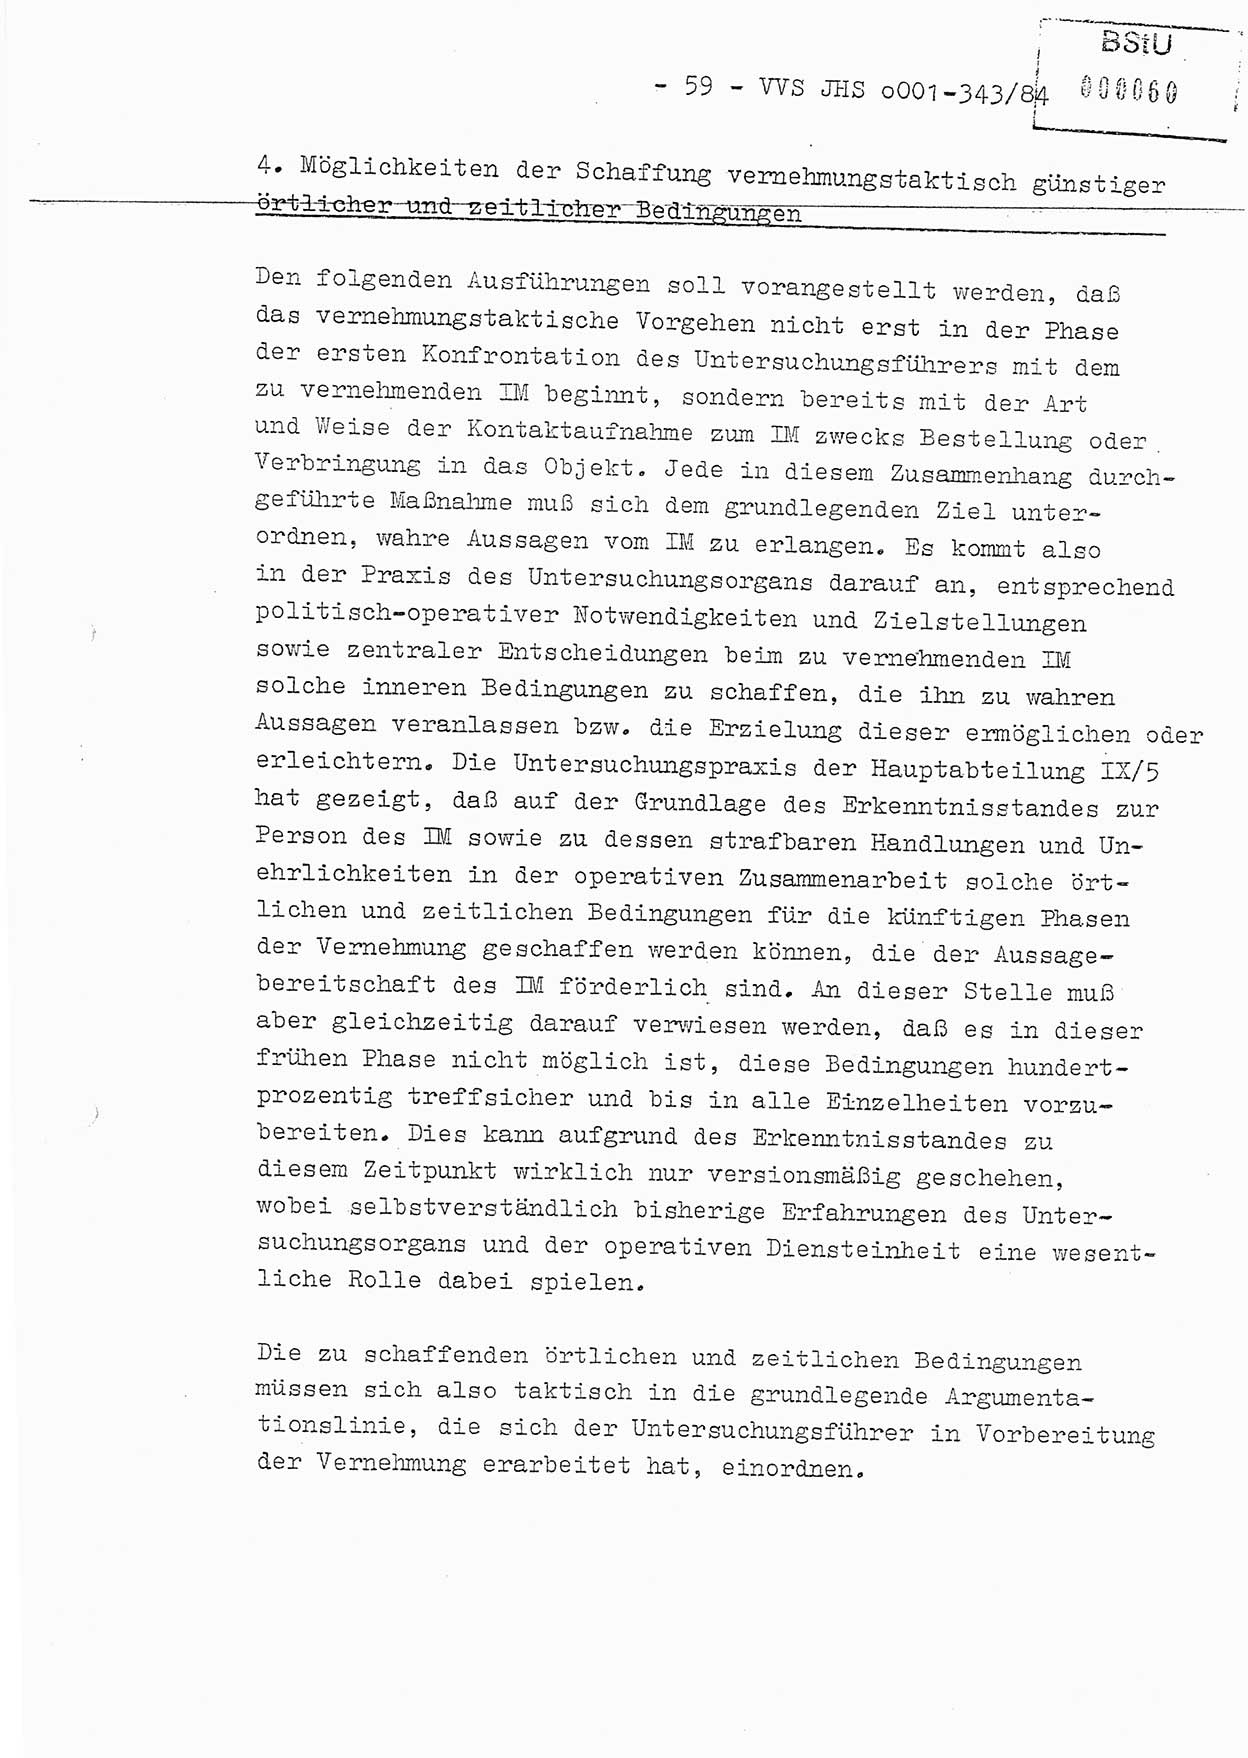 Diplomarbeit, Oberleutnant Bernd Michael (HA Ⅸ/5), Oberleutnant Peter Felber (HA IX/5), Ministerium für Staatssicherheit (MfS) [Deutsche Demokratische Republik (DDR)], Juristische Hochschule (JHS), Vertrauliche Verschlußsache (VVS) o001-343/84, Potsdam 1985, Seite 59 (Dipl.-Arb. MfS DDR JHS VVS o001-343/84 1985, S. 59)